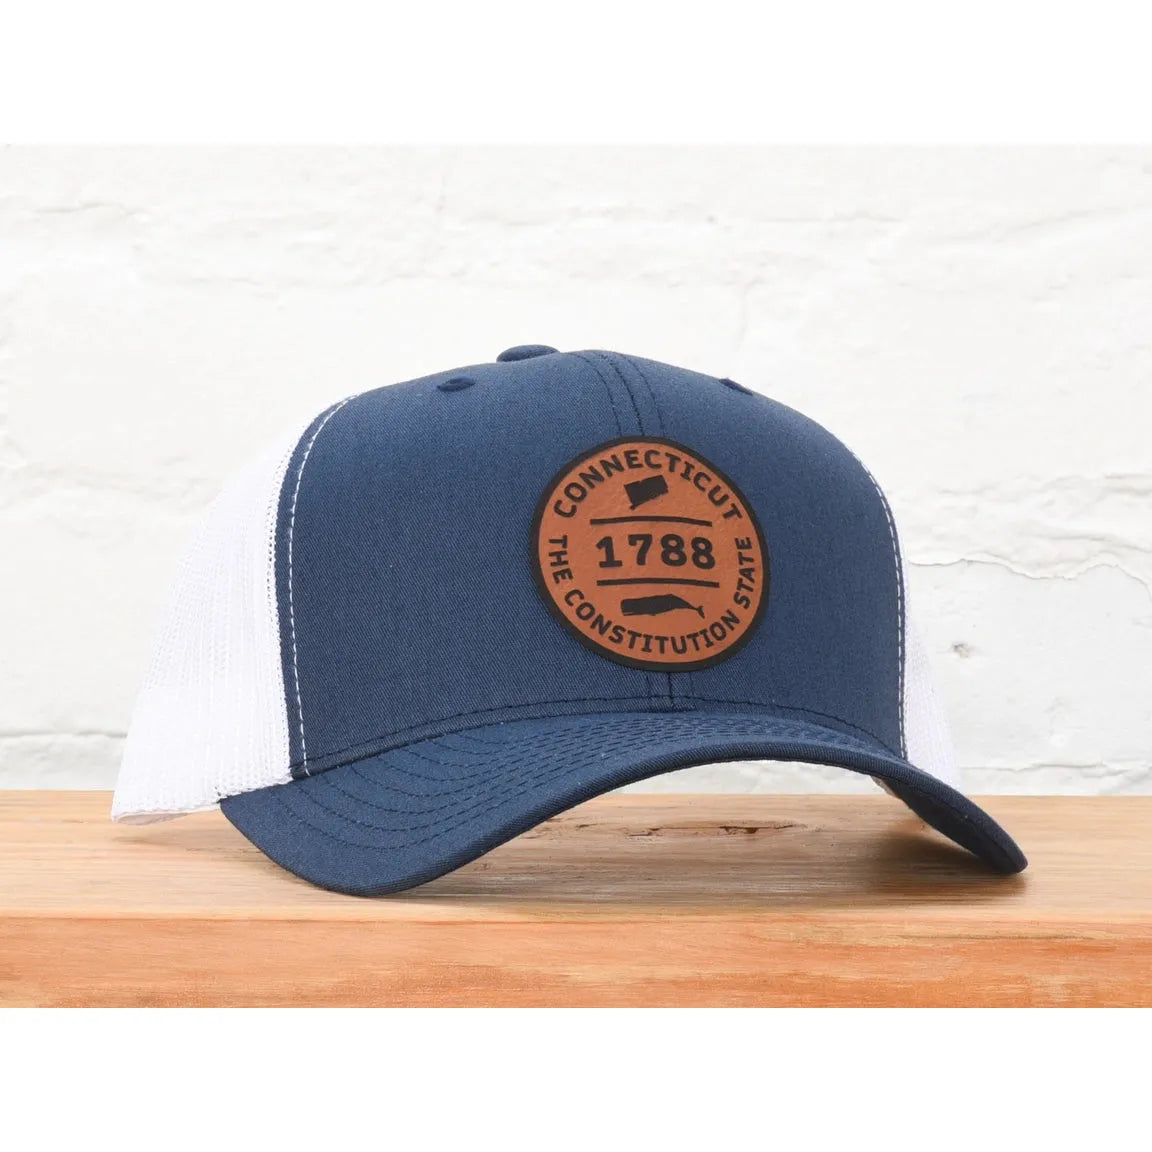 Connecticut Snapback Hat